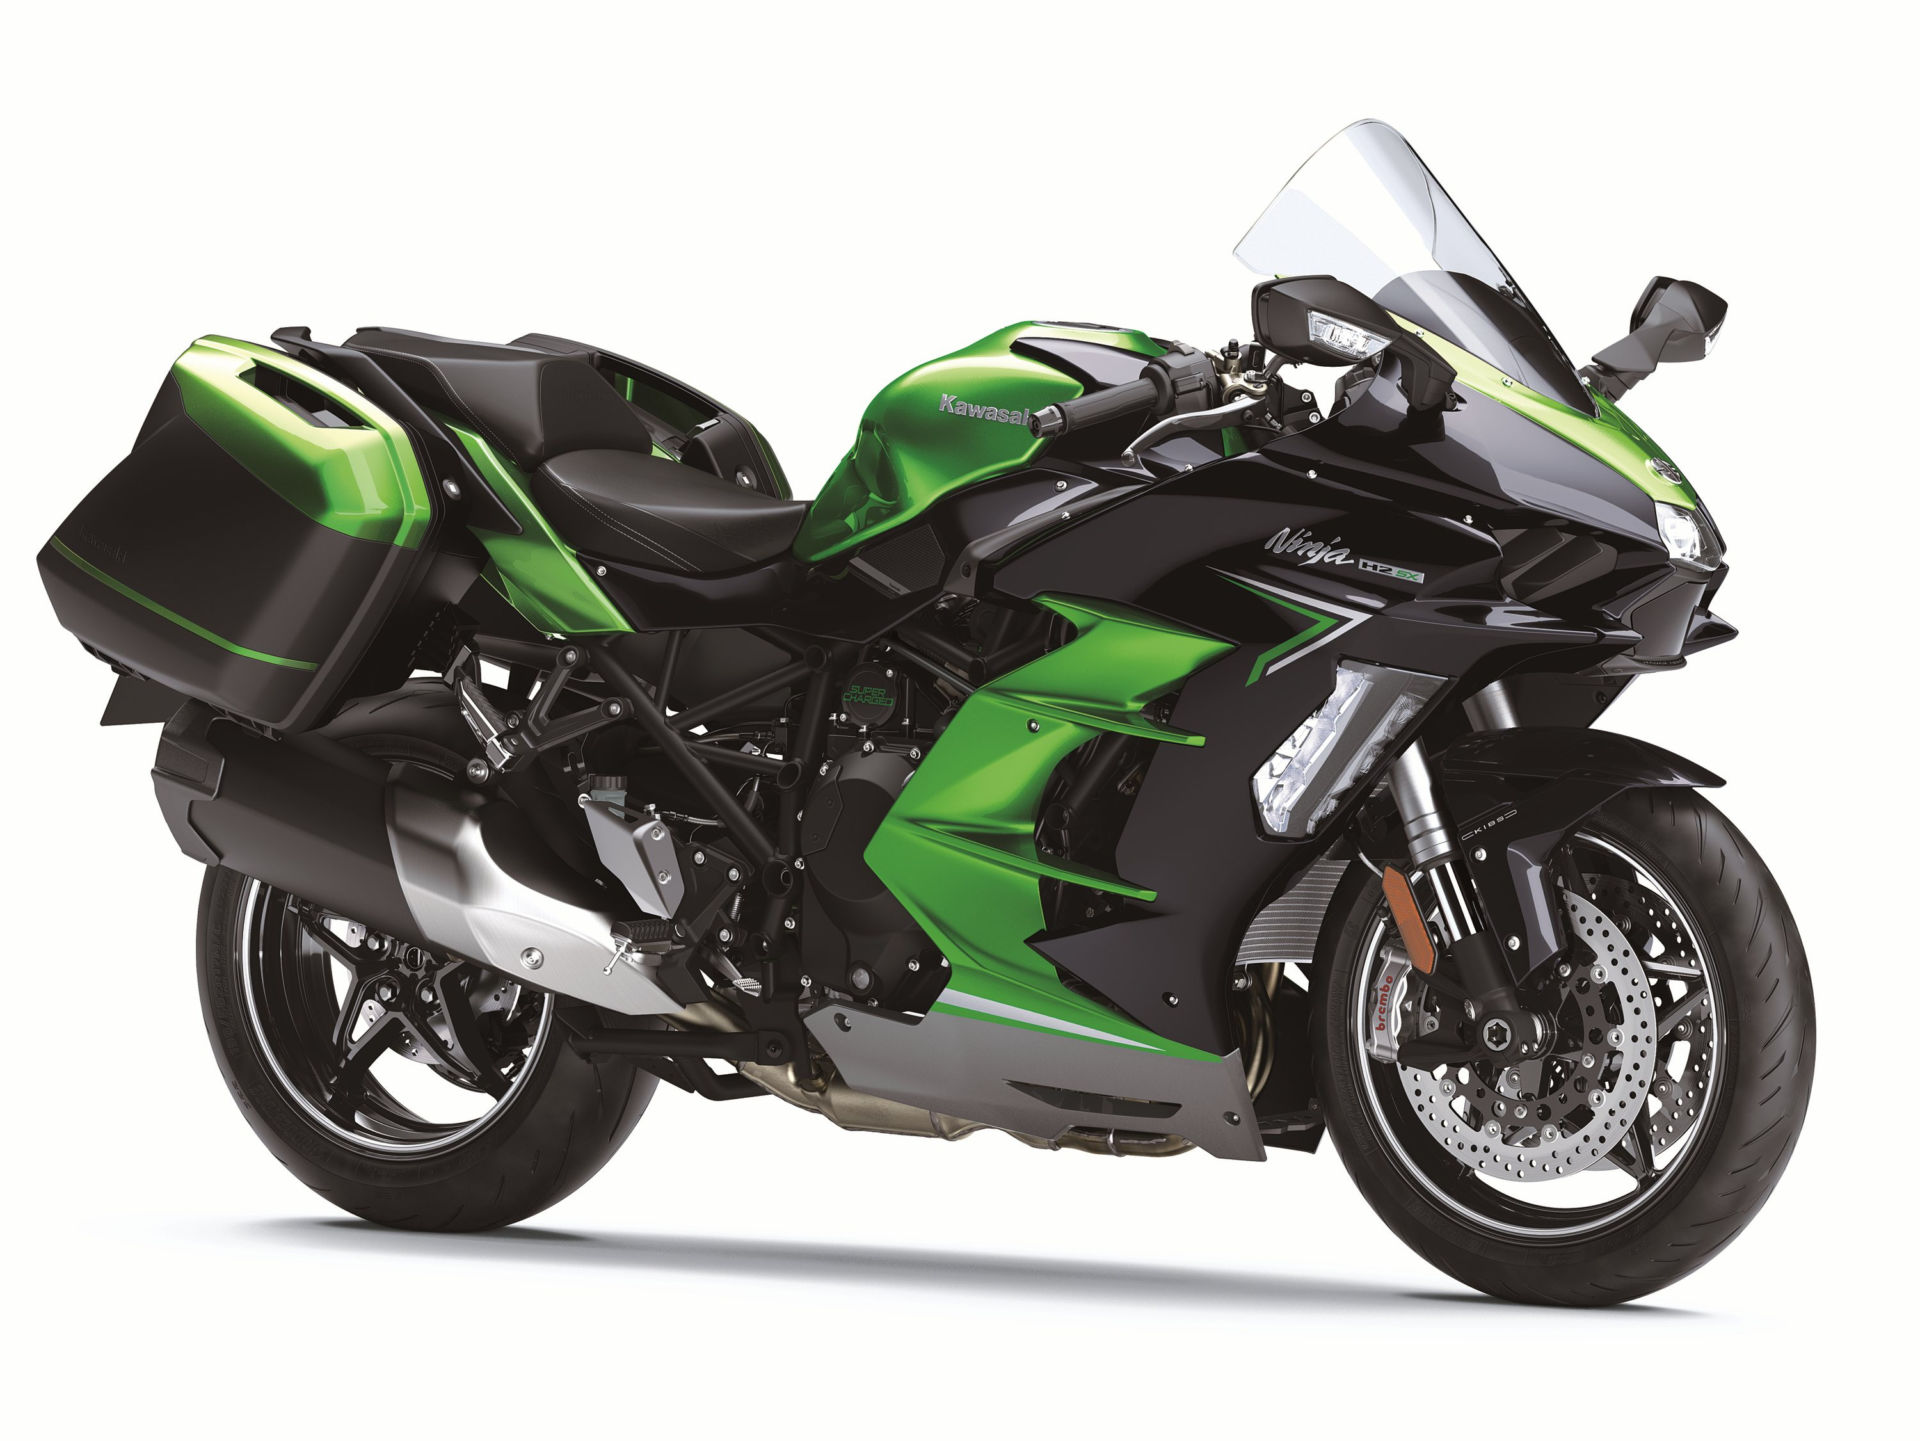 Kawasaki Ninja H2 SX Gets More Power & Technology 2022 - Roadracing World Magazine | Motorcycle Riding, Racing & Tech News